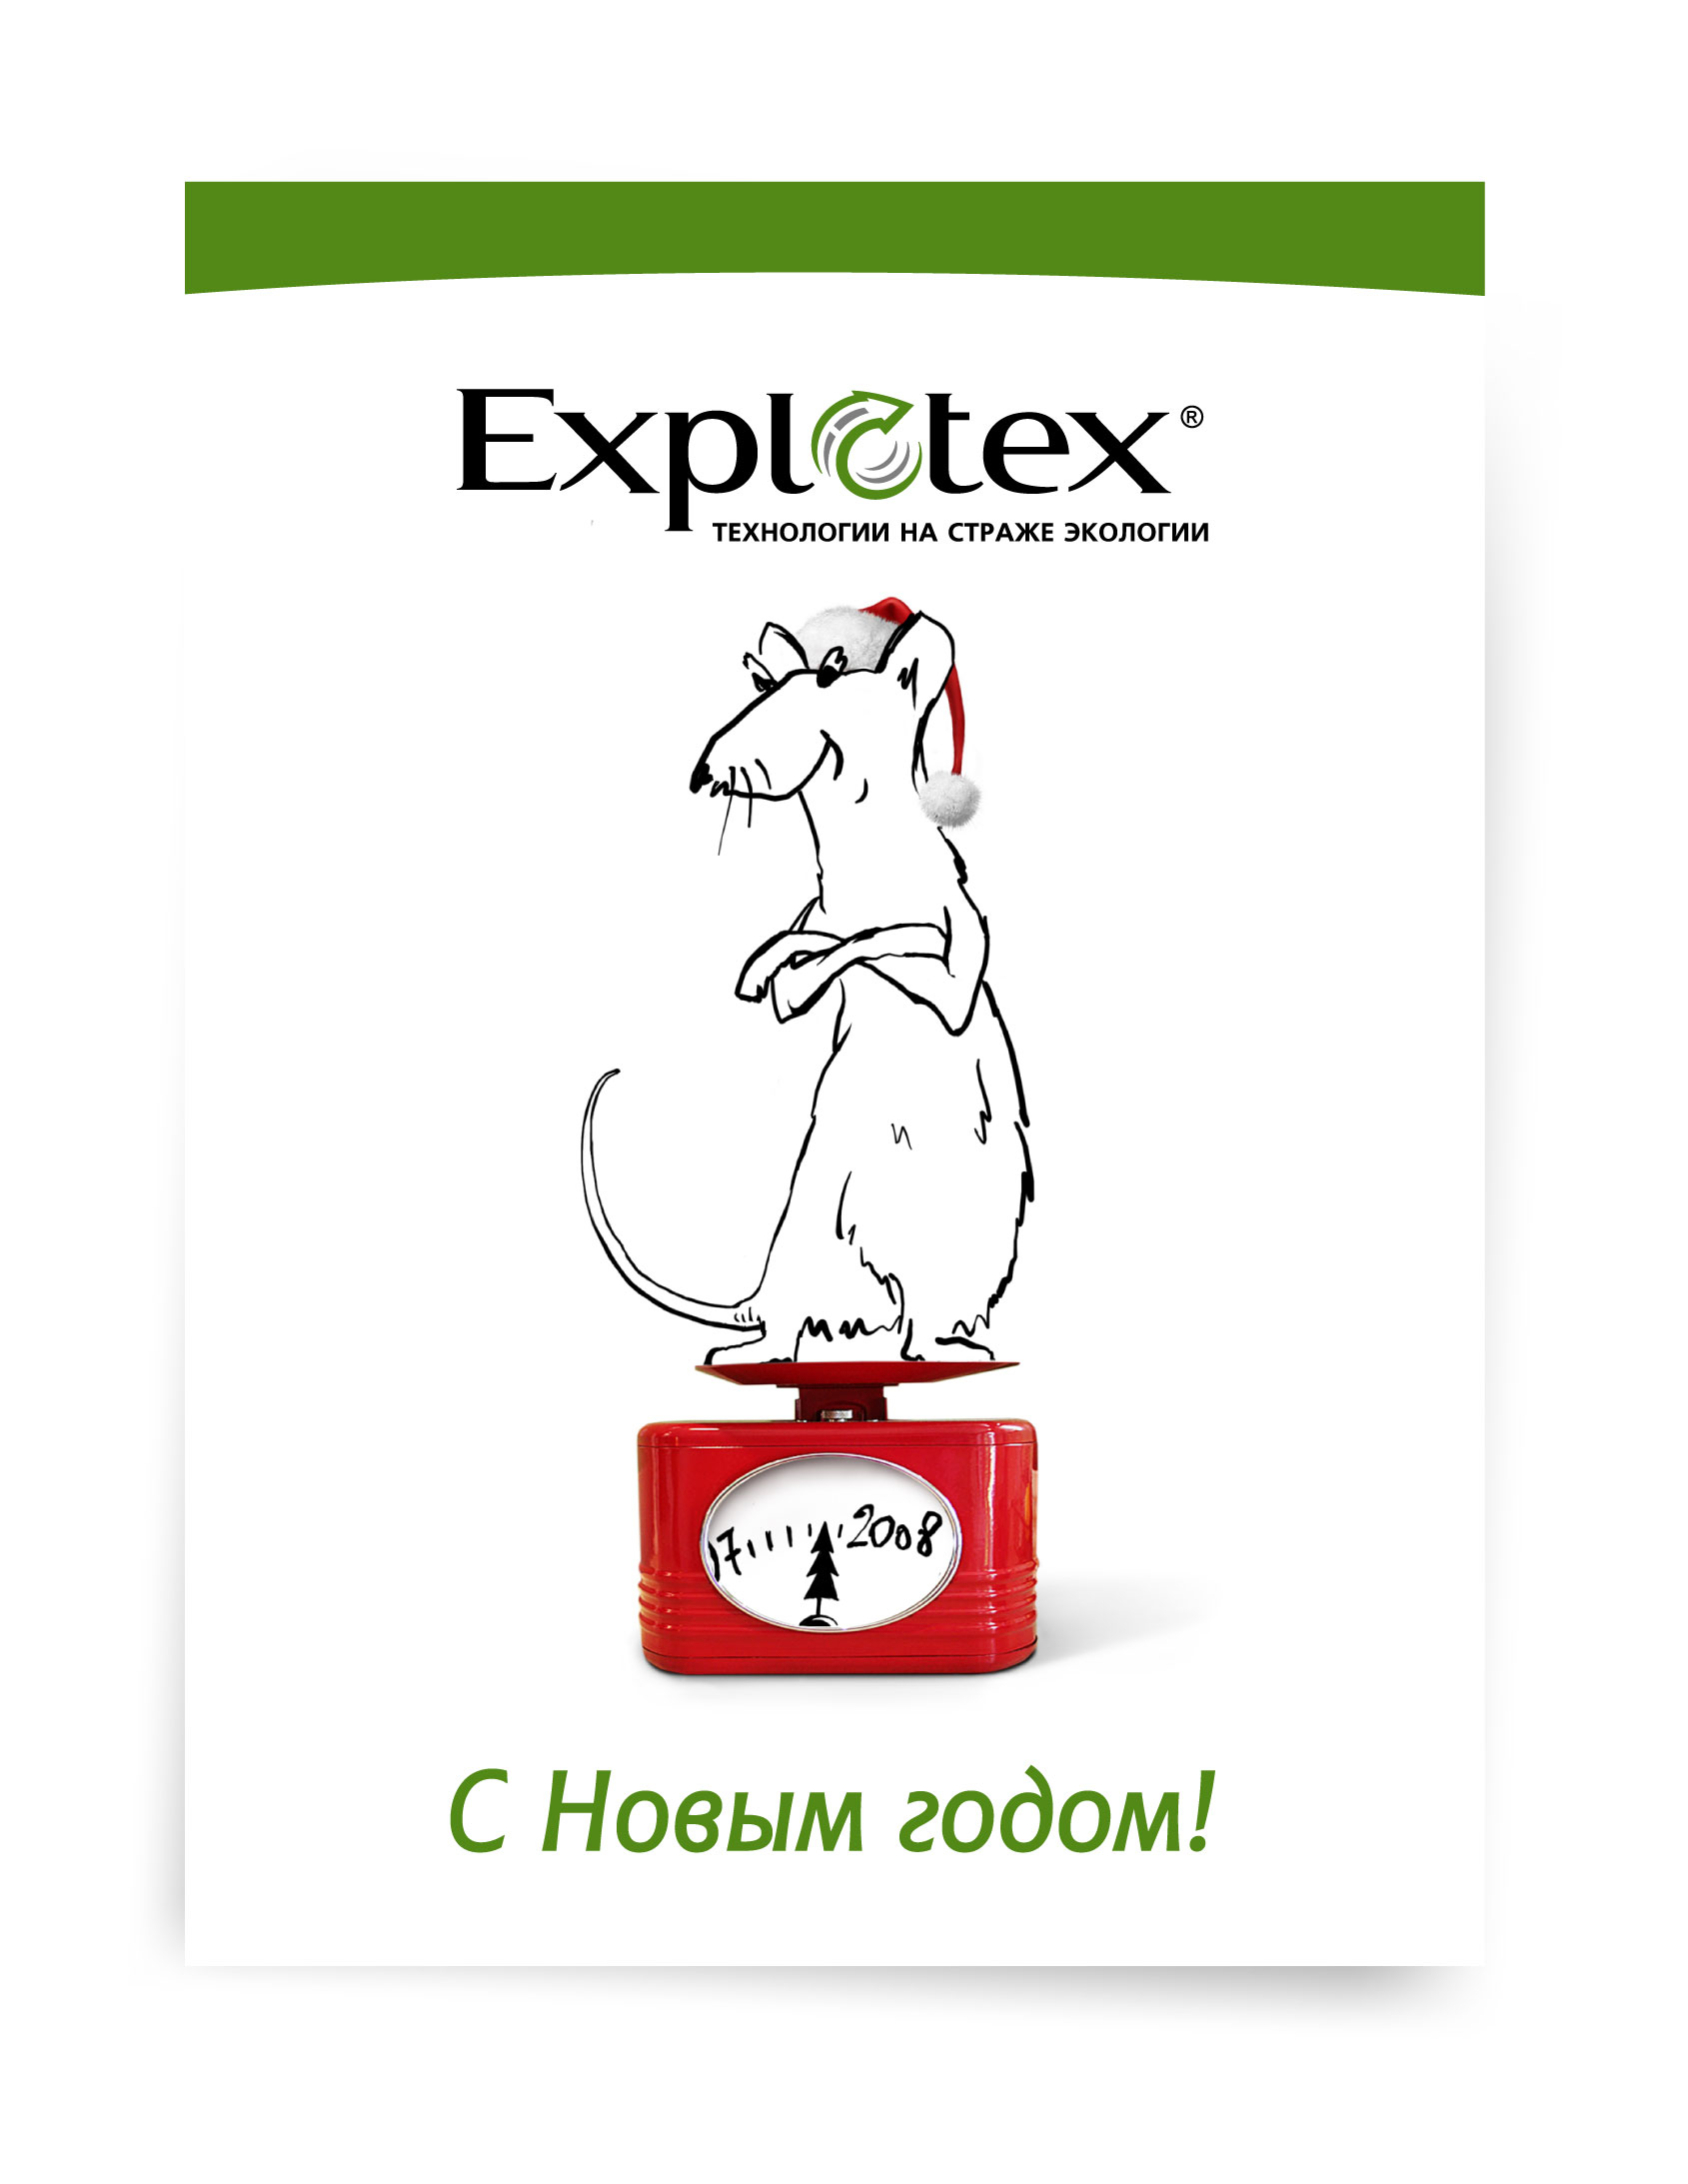      explotex_00